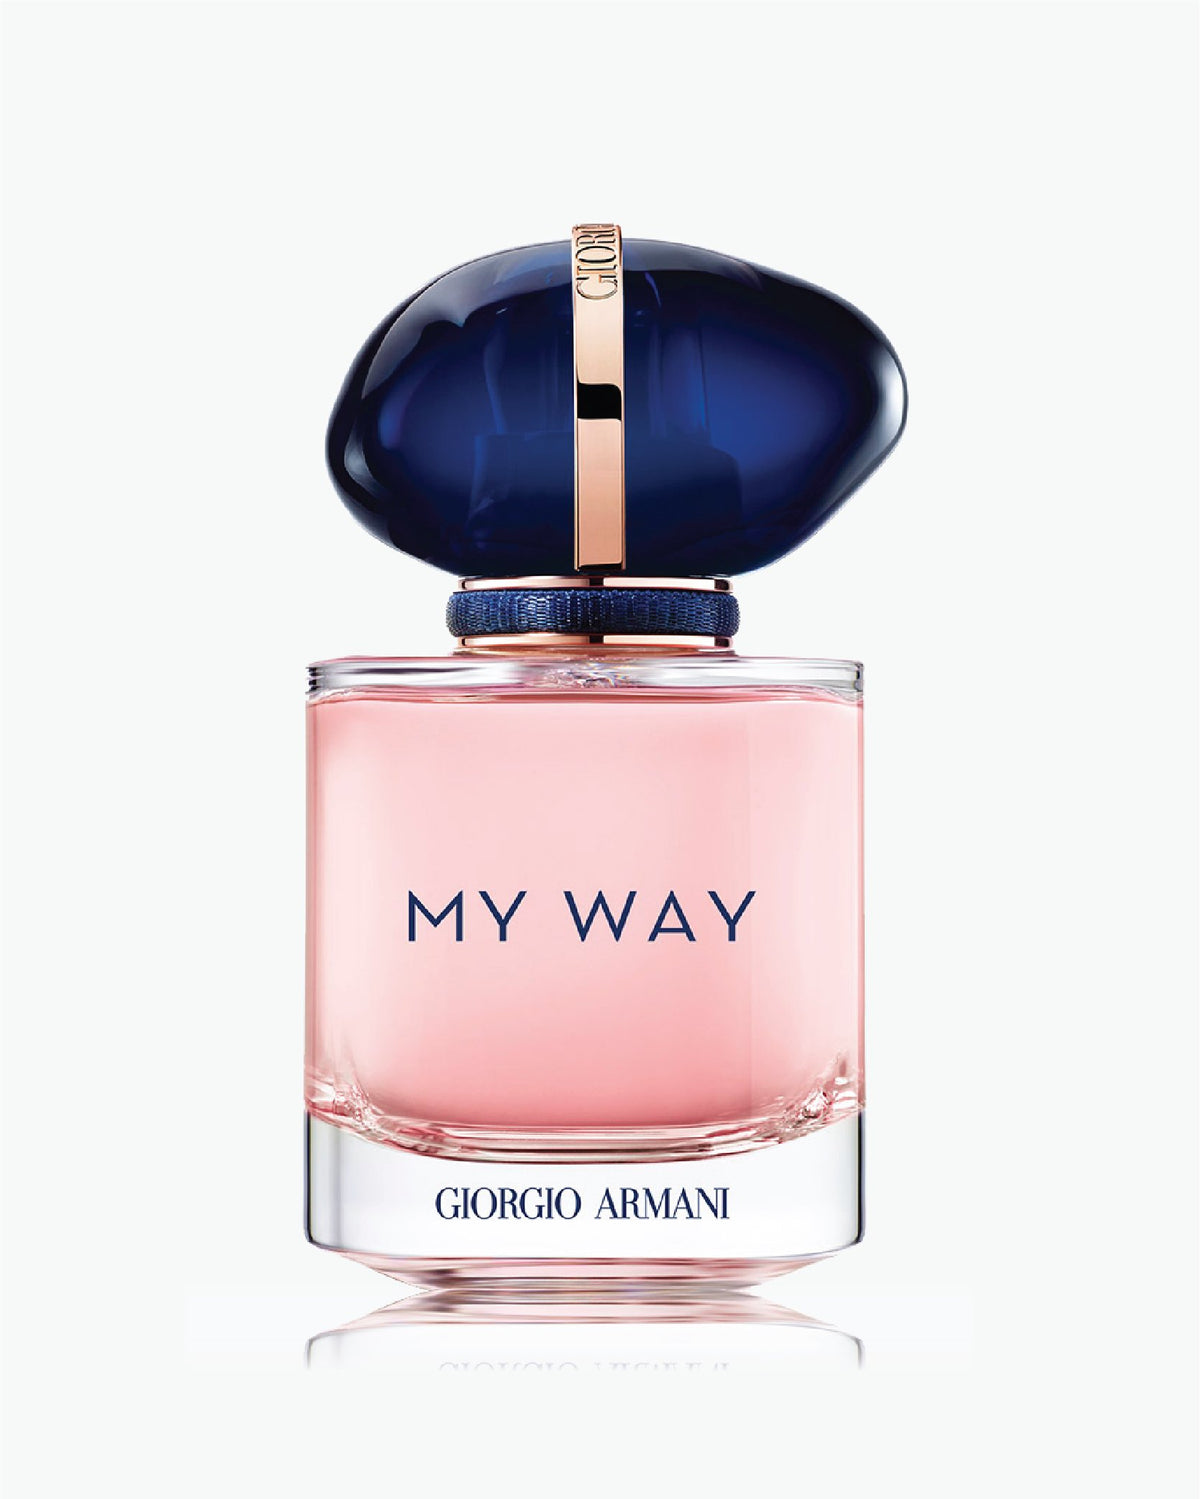 My Way Eau De Parfum